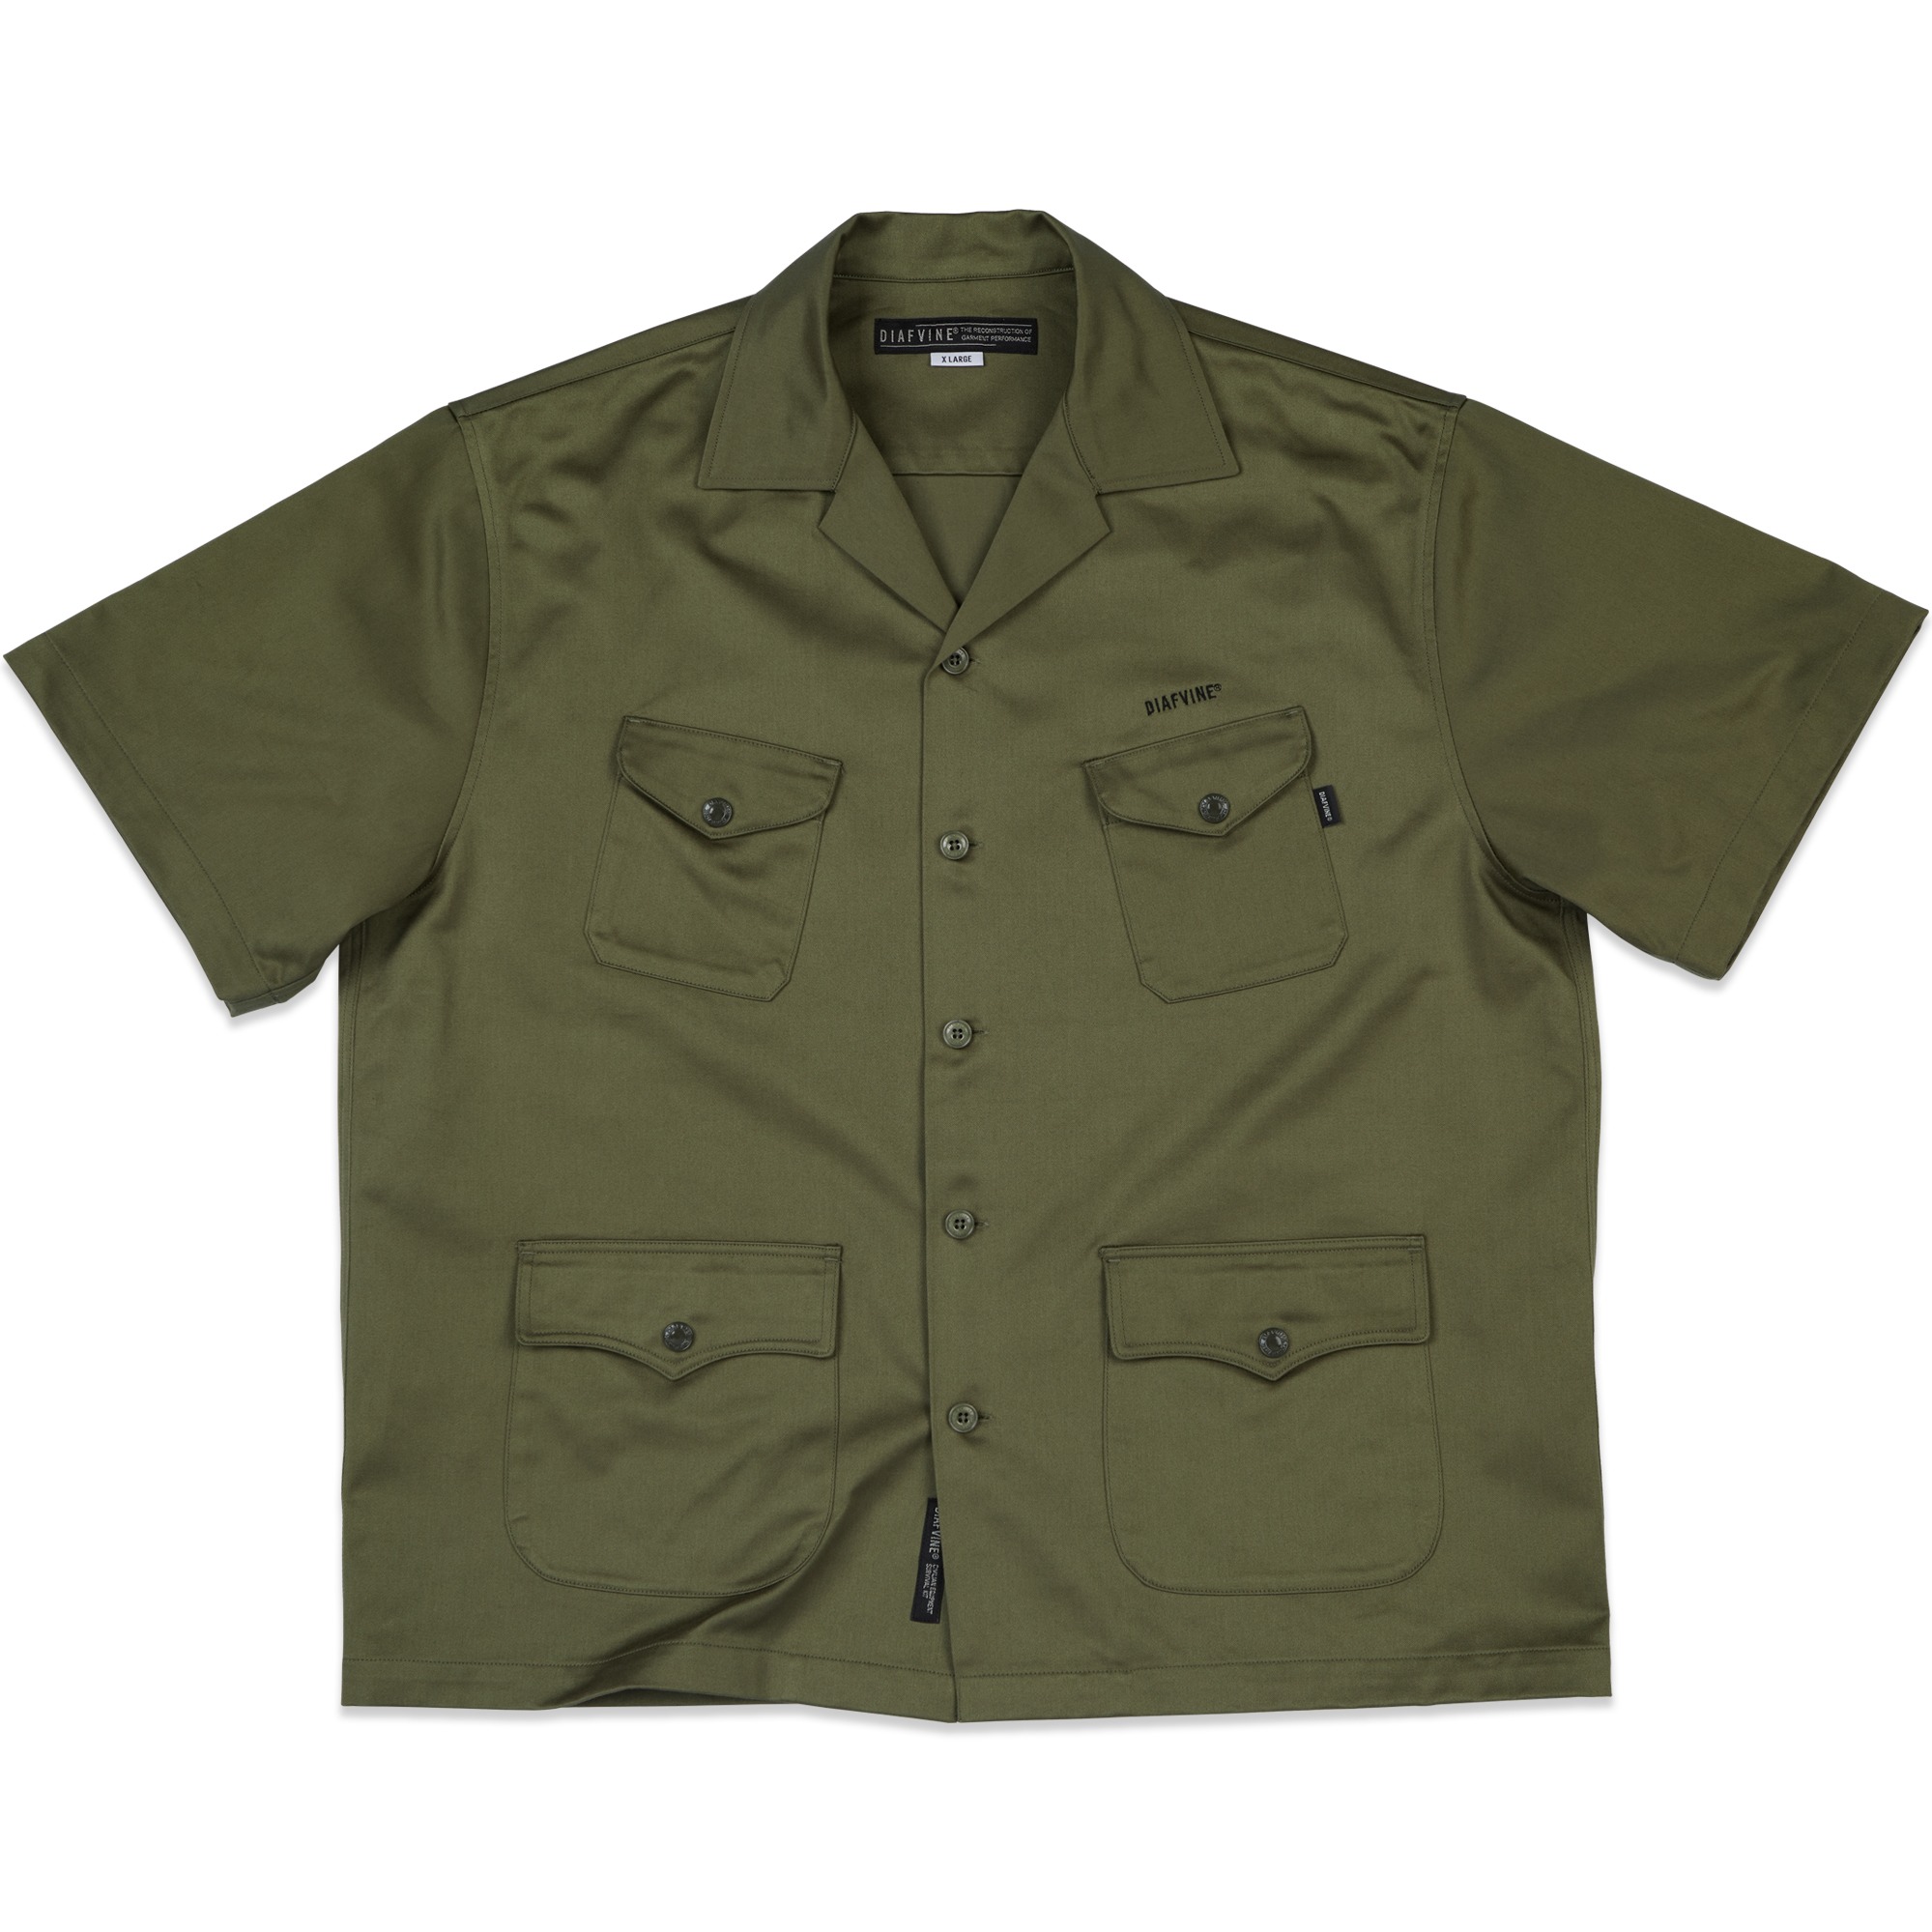 DV.LOT 685 Multi Pocket Shirt -Military Olive Drab-